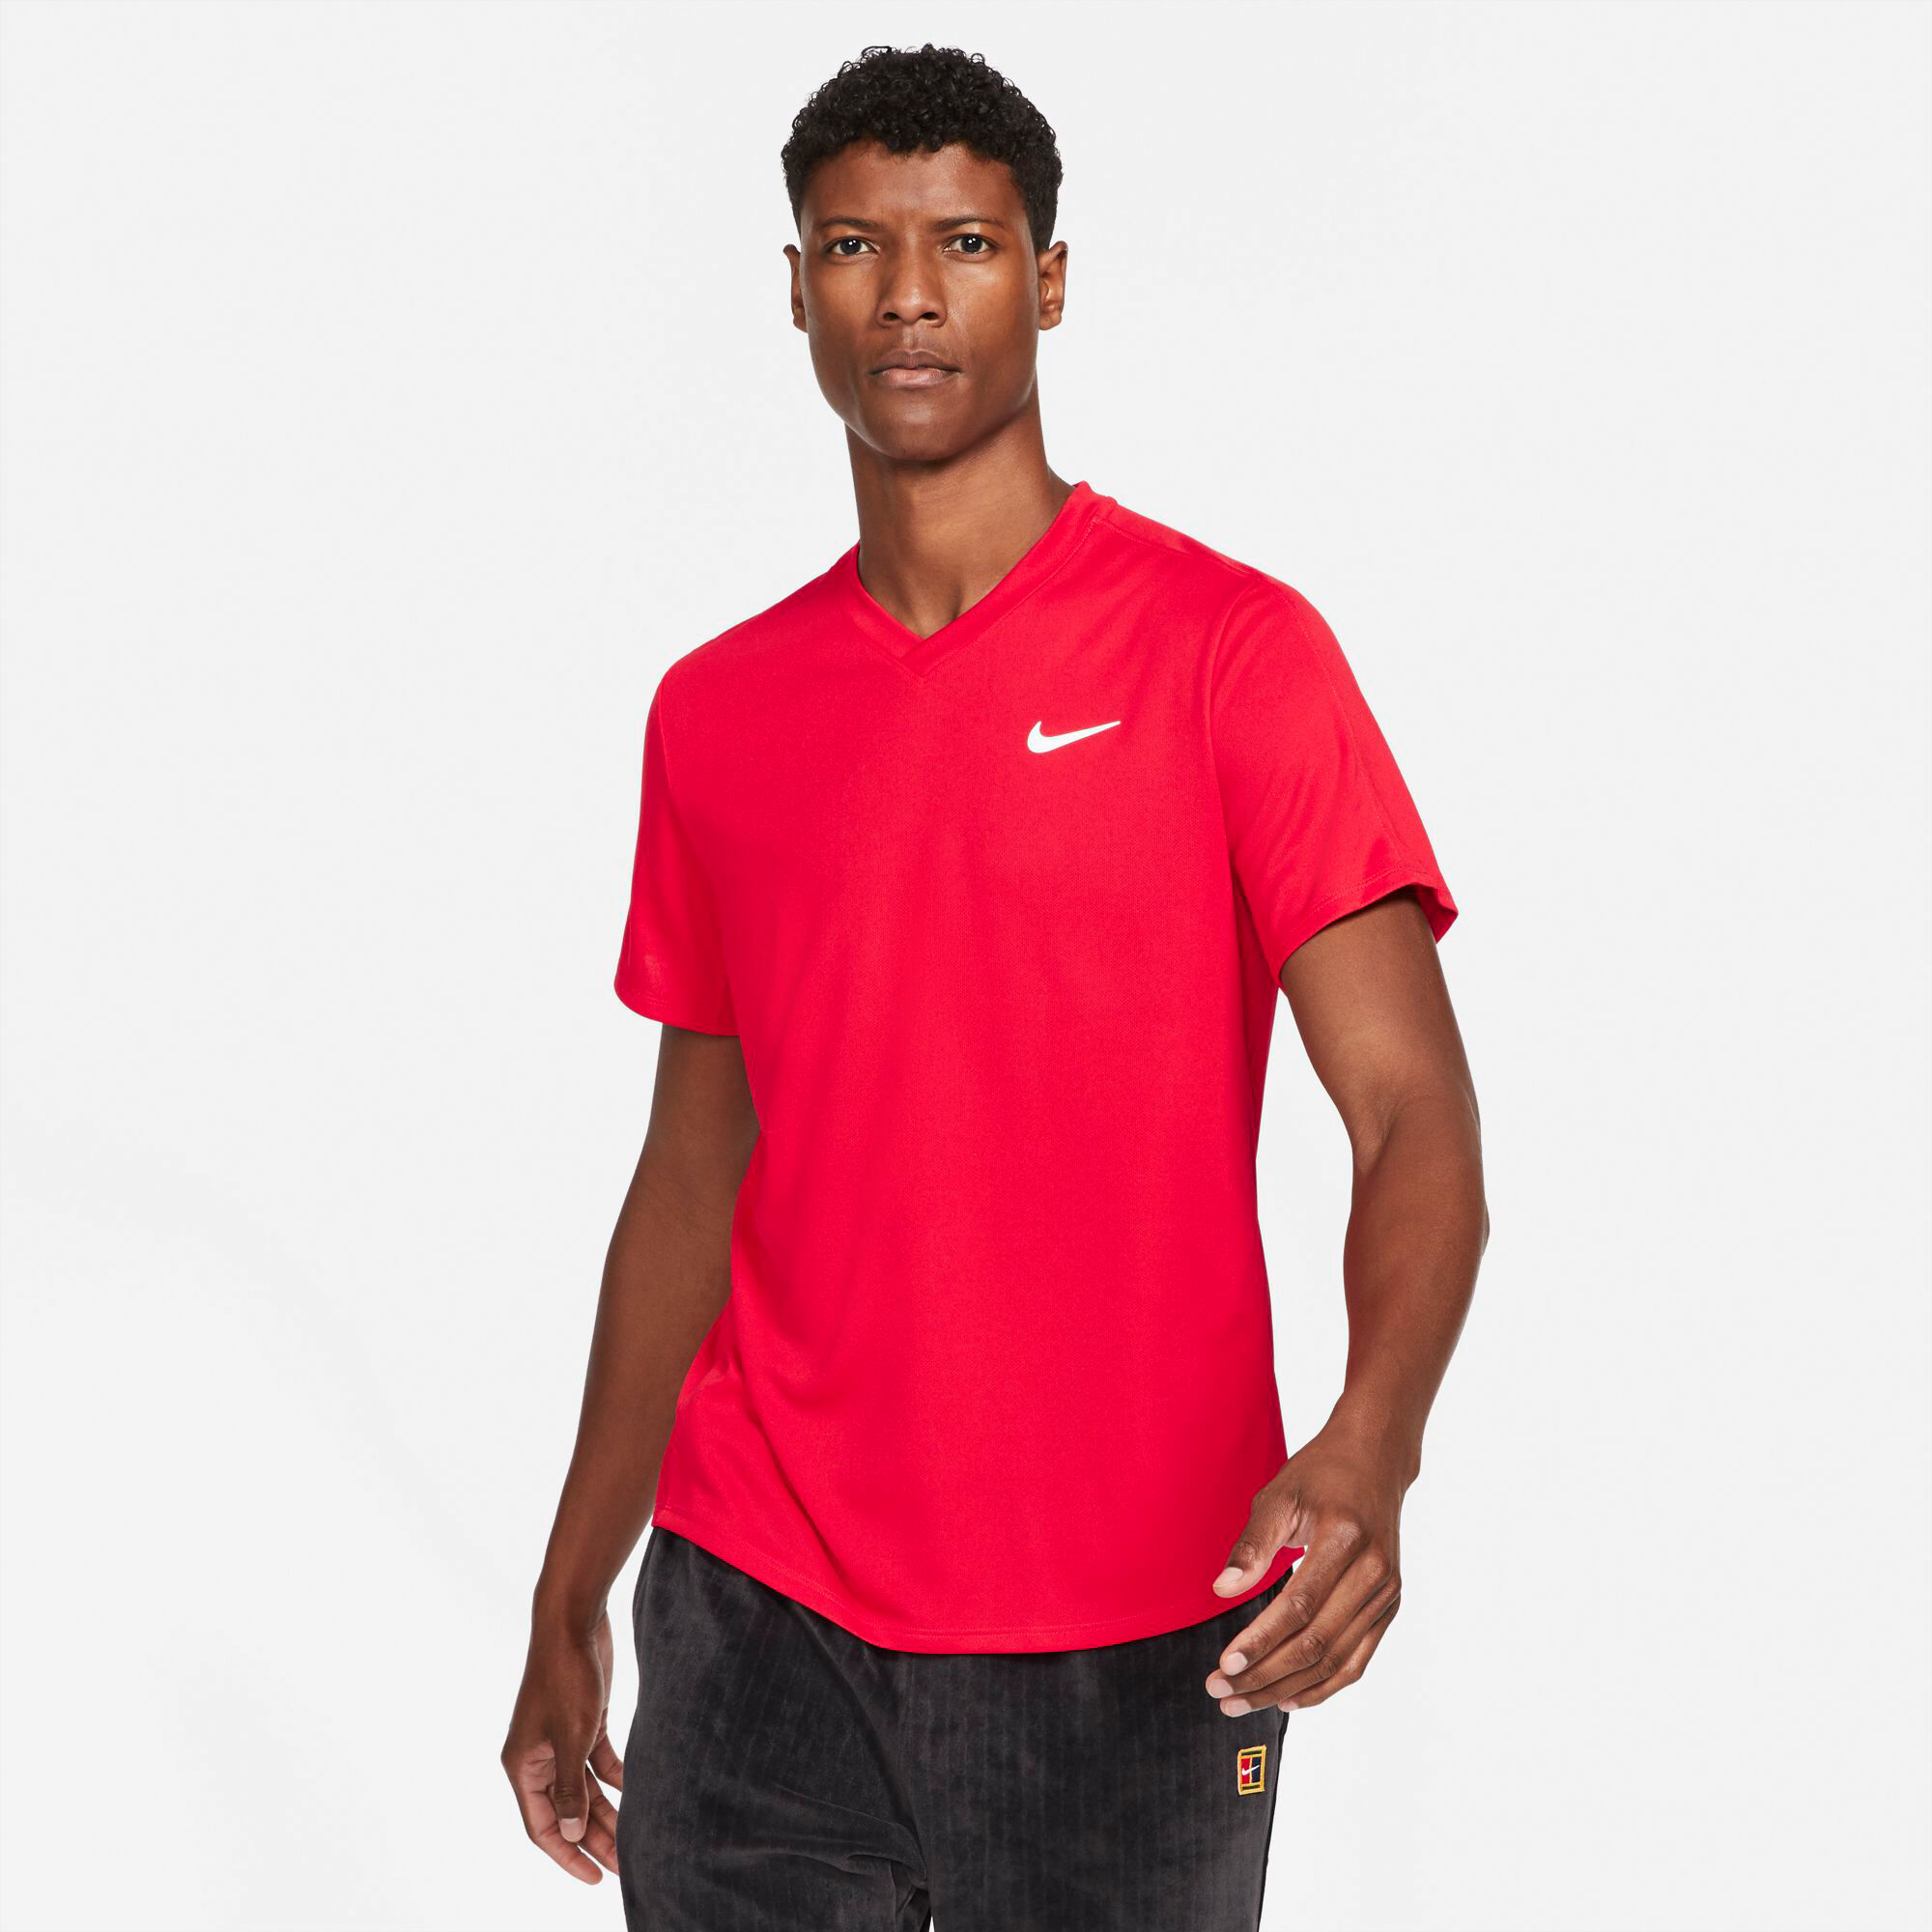 Buy Nike Dri-Fit Victory T-Shirt Men Red online | Tennis Point UK